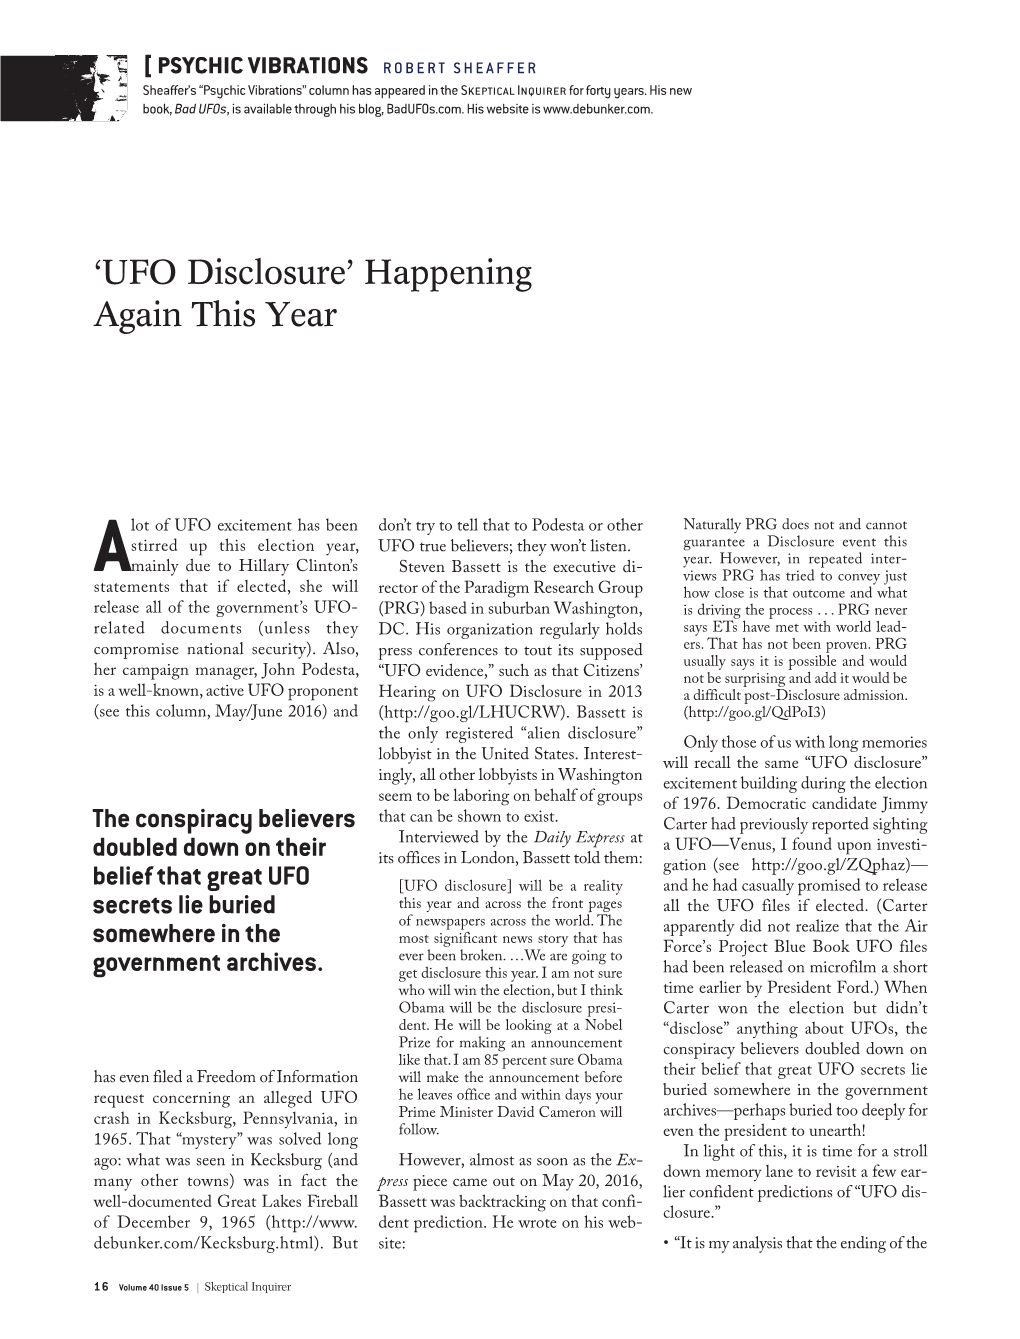 UFO Disclosure’ Happening Again This Year